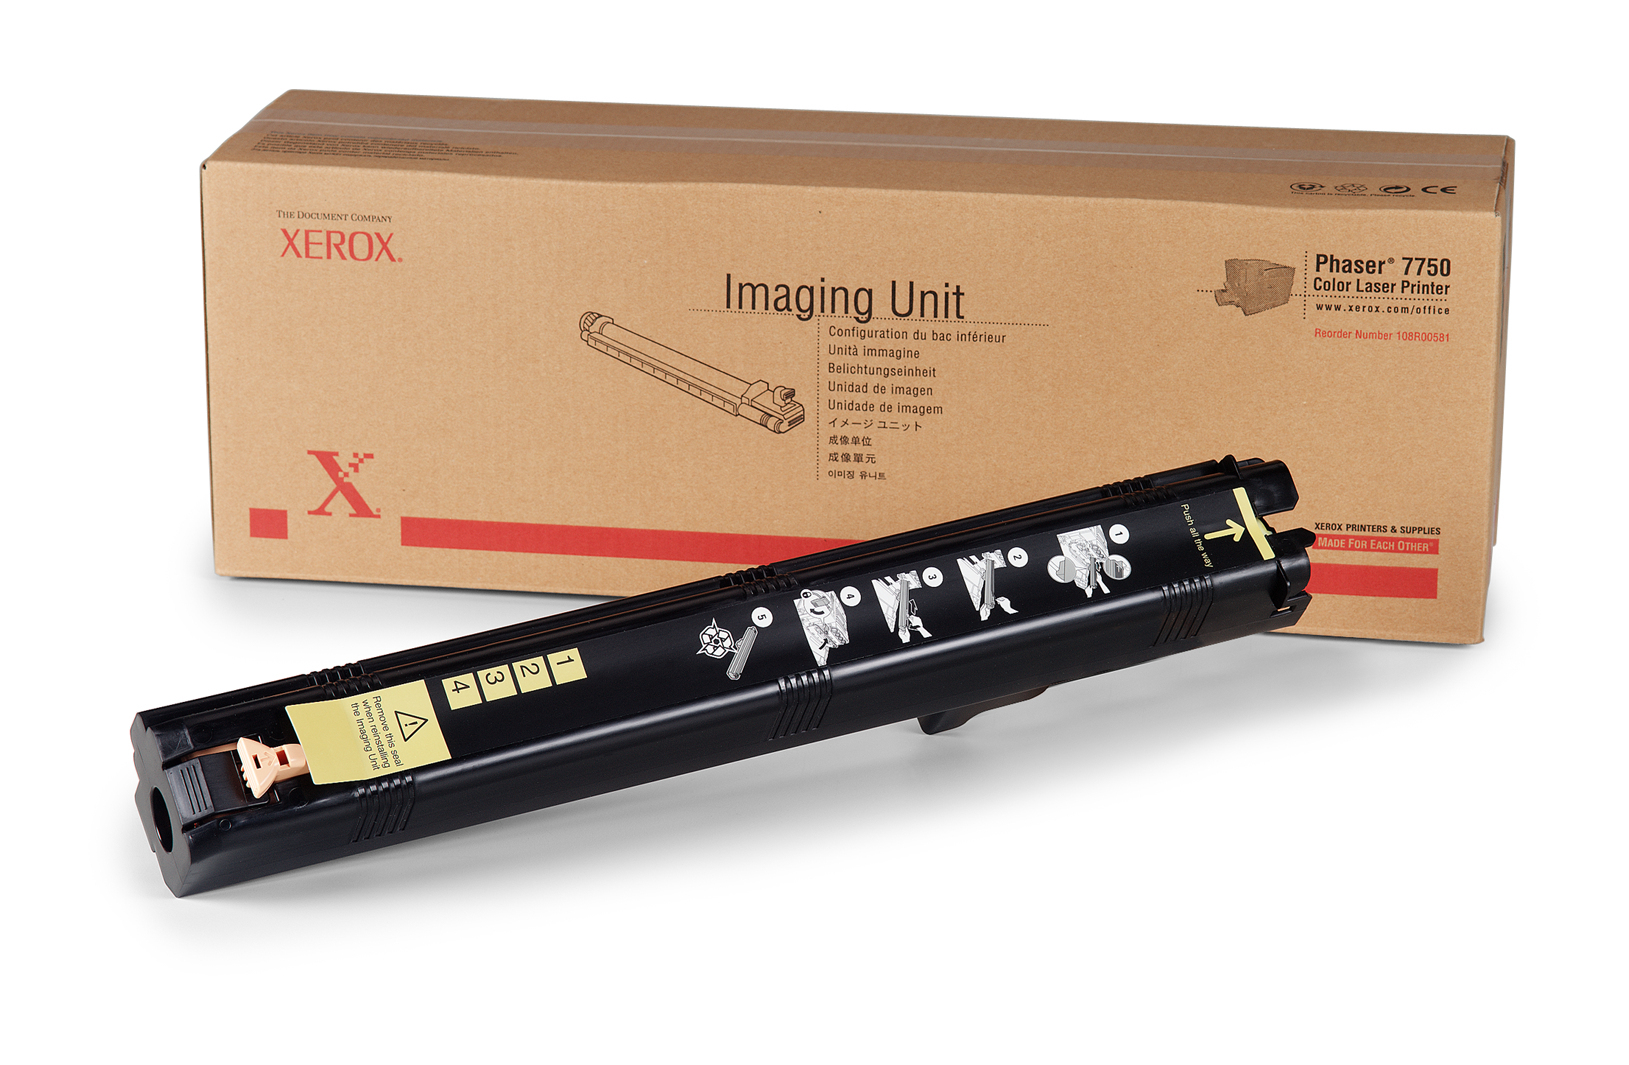 XEROX Imaging Unit